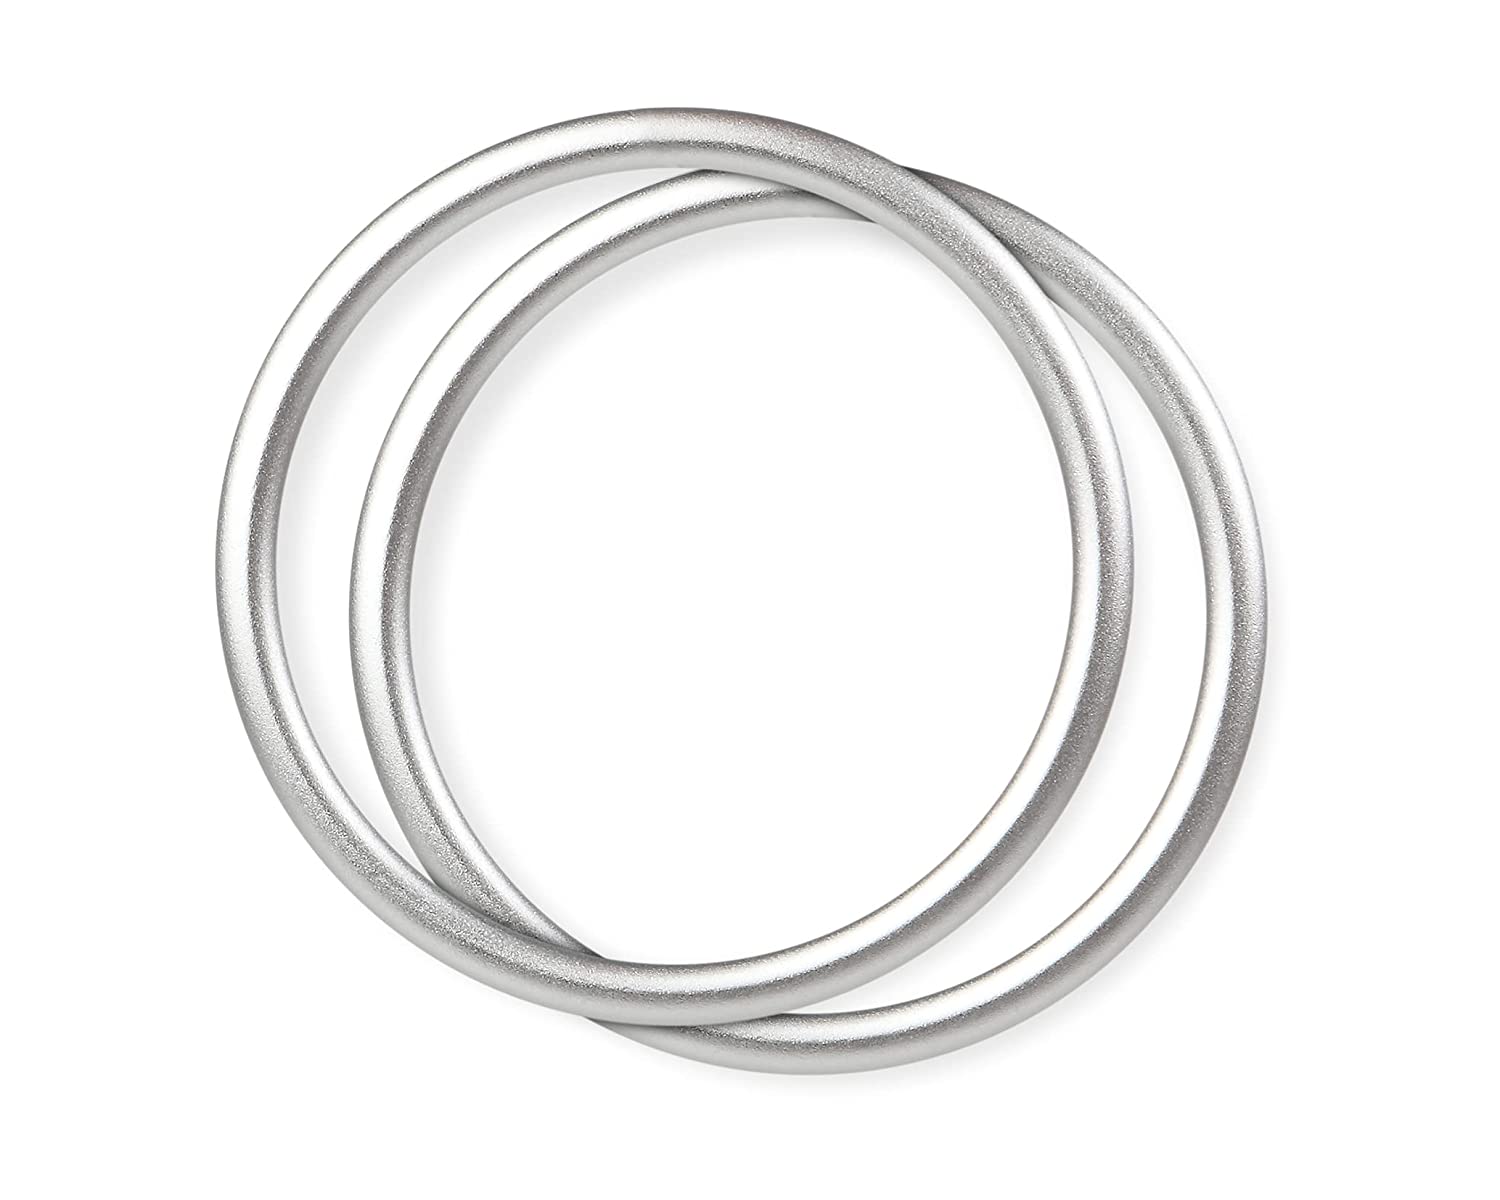 Kiokids B. Set of 2 Rings 6 mm / 7.5 cm Diameter - Baby Carrier, Unisex